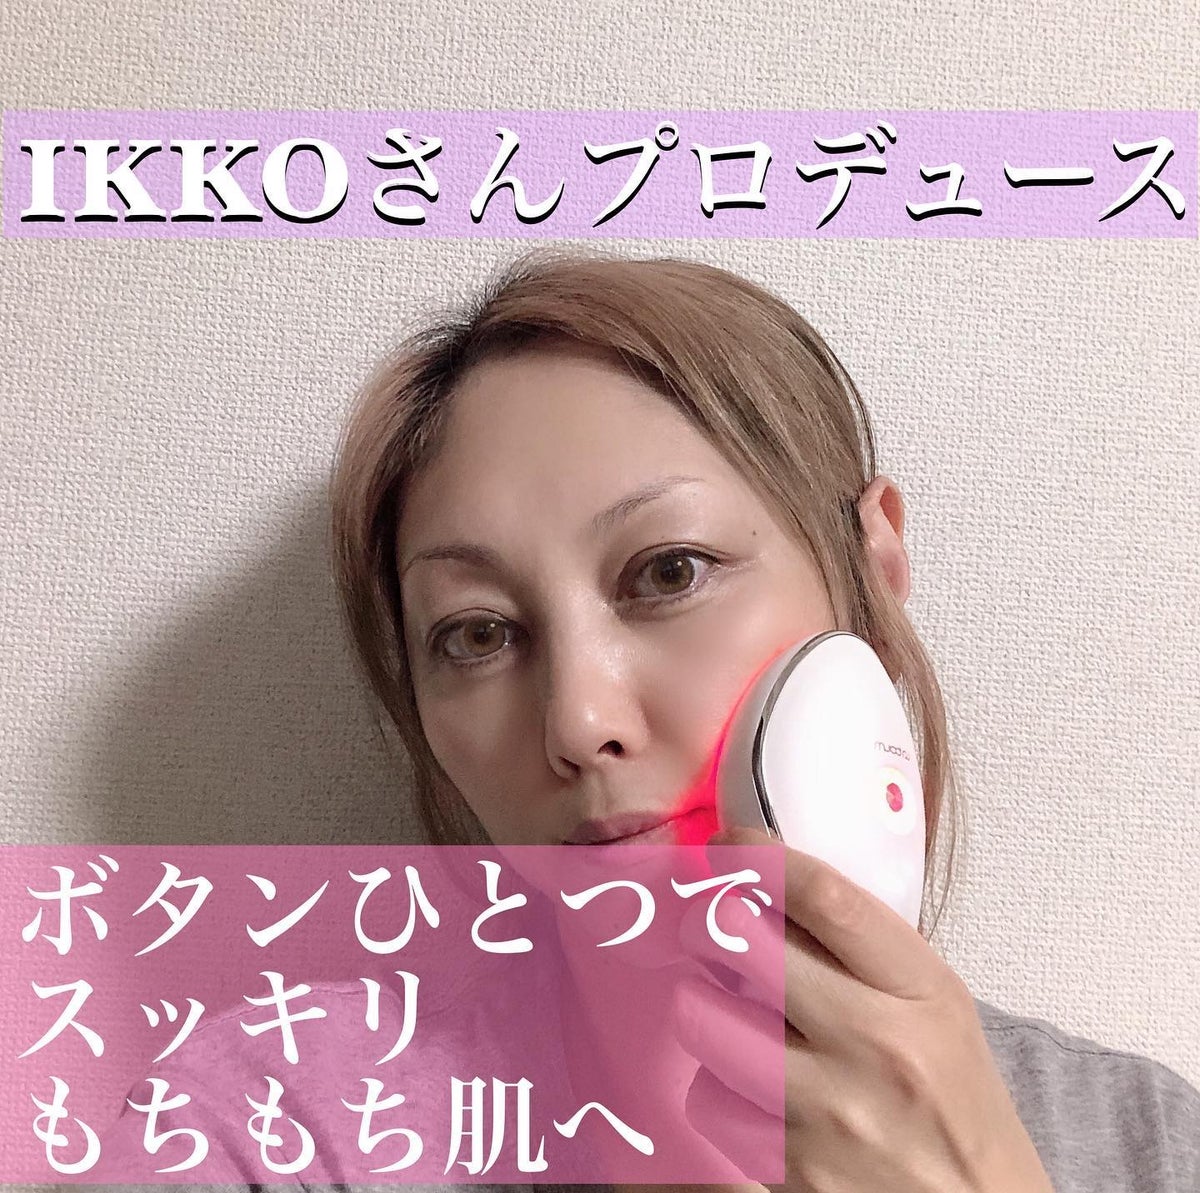 ikkoさんプロデュース美顔器&専用クリーム - 美容機器